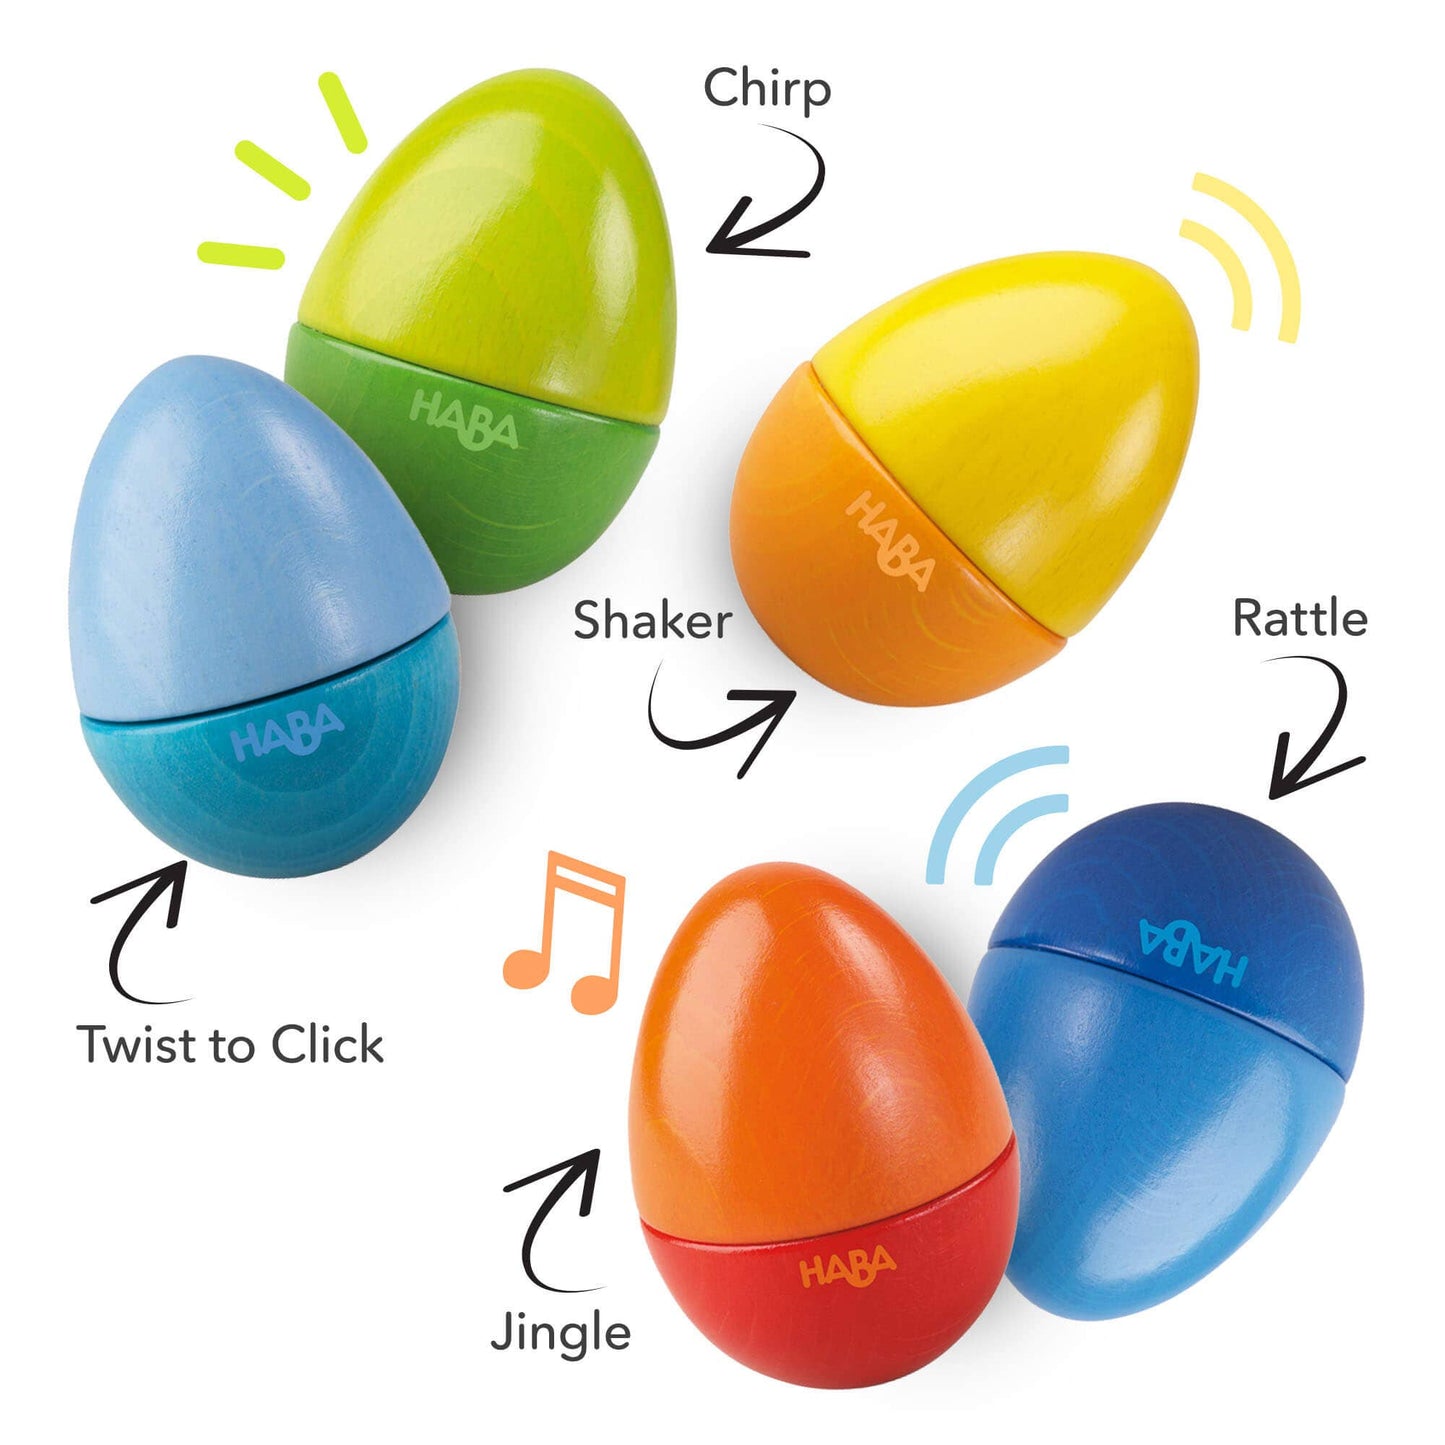 HABA's Musical Eggs